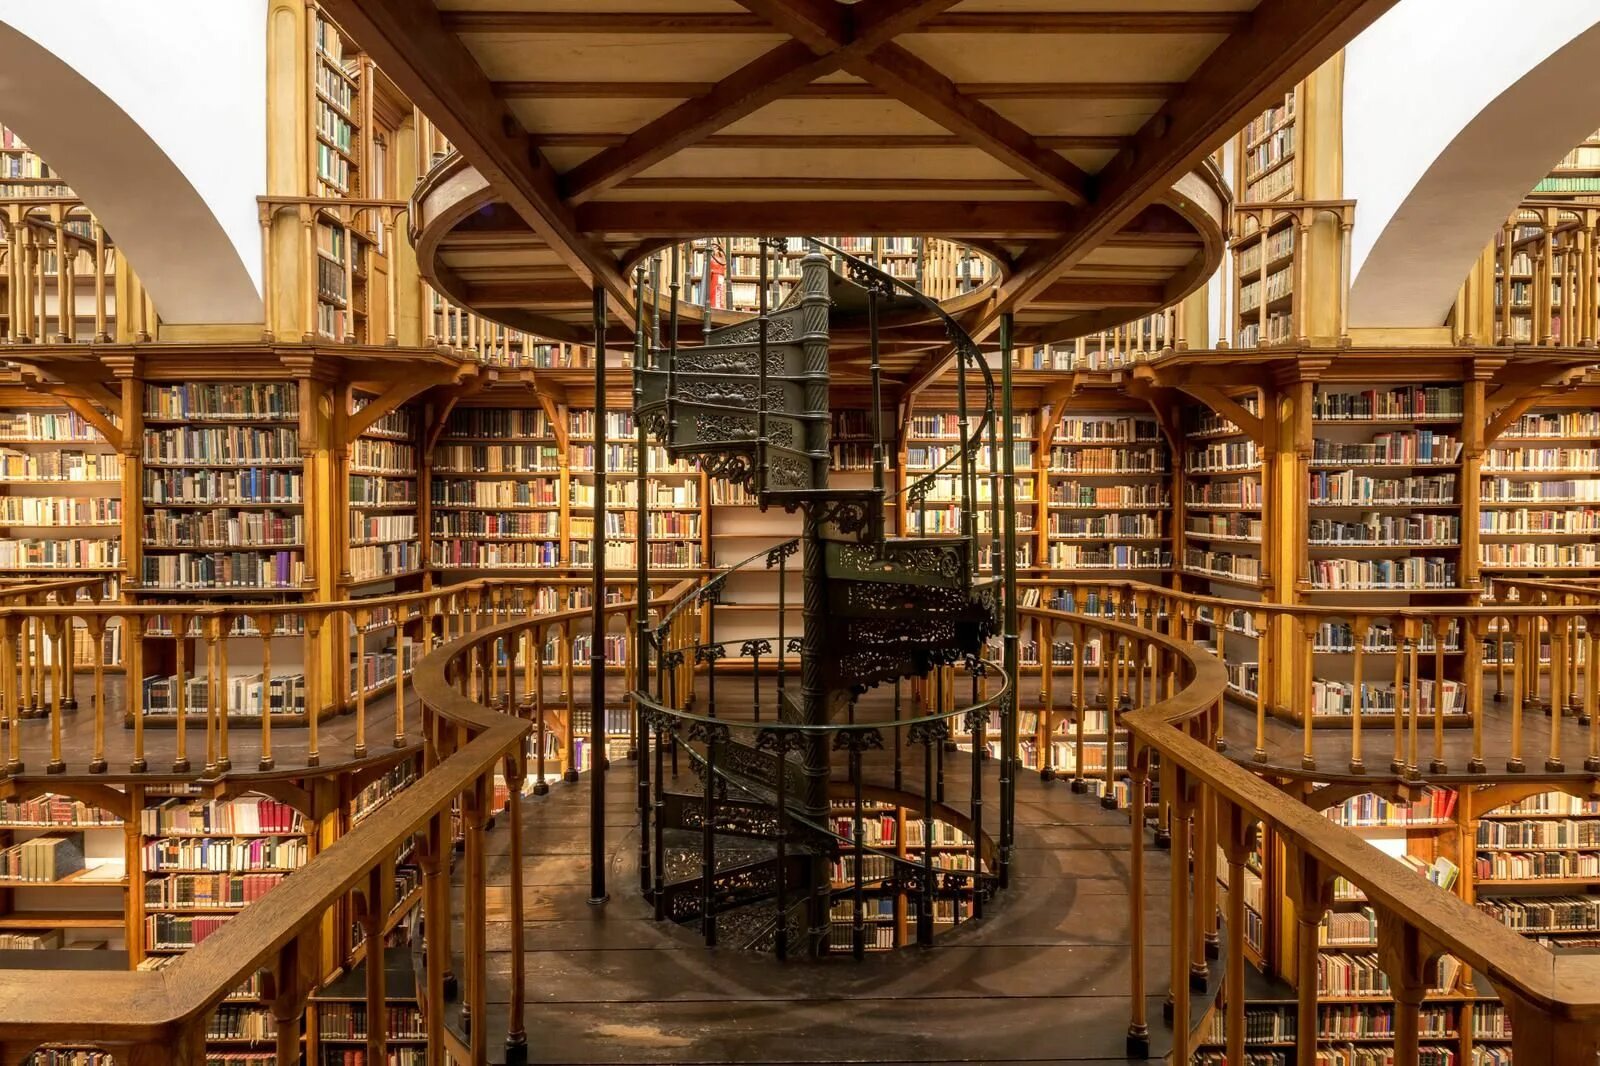 Voice library. Библиотека науки, Герлиц, Германия. Maria Laach Abbey Library. Библиотека Джироламини Италия.